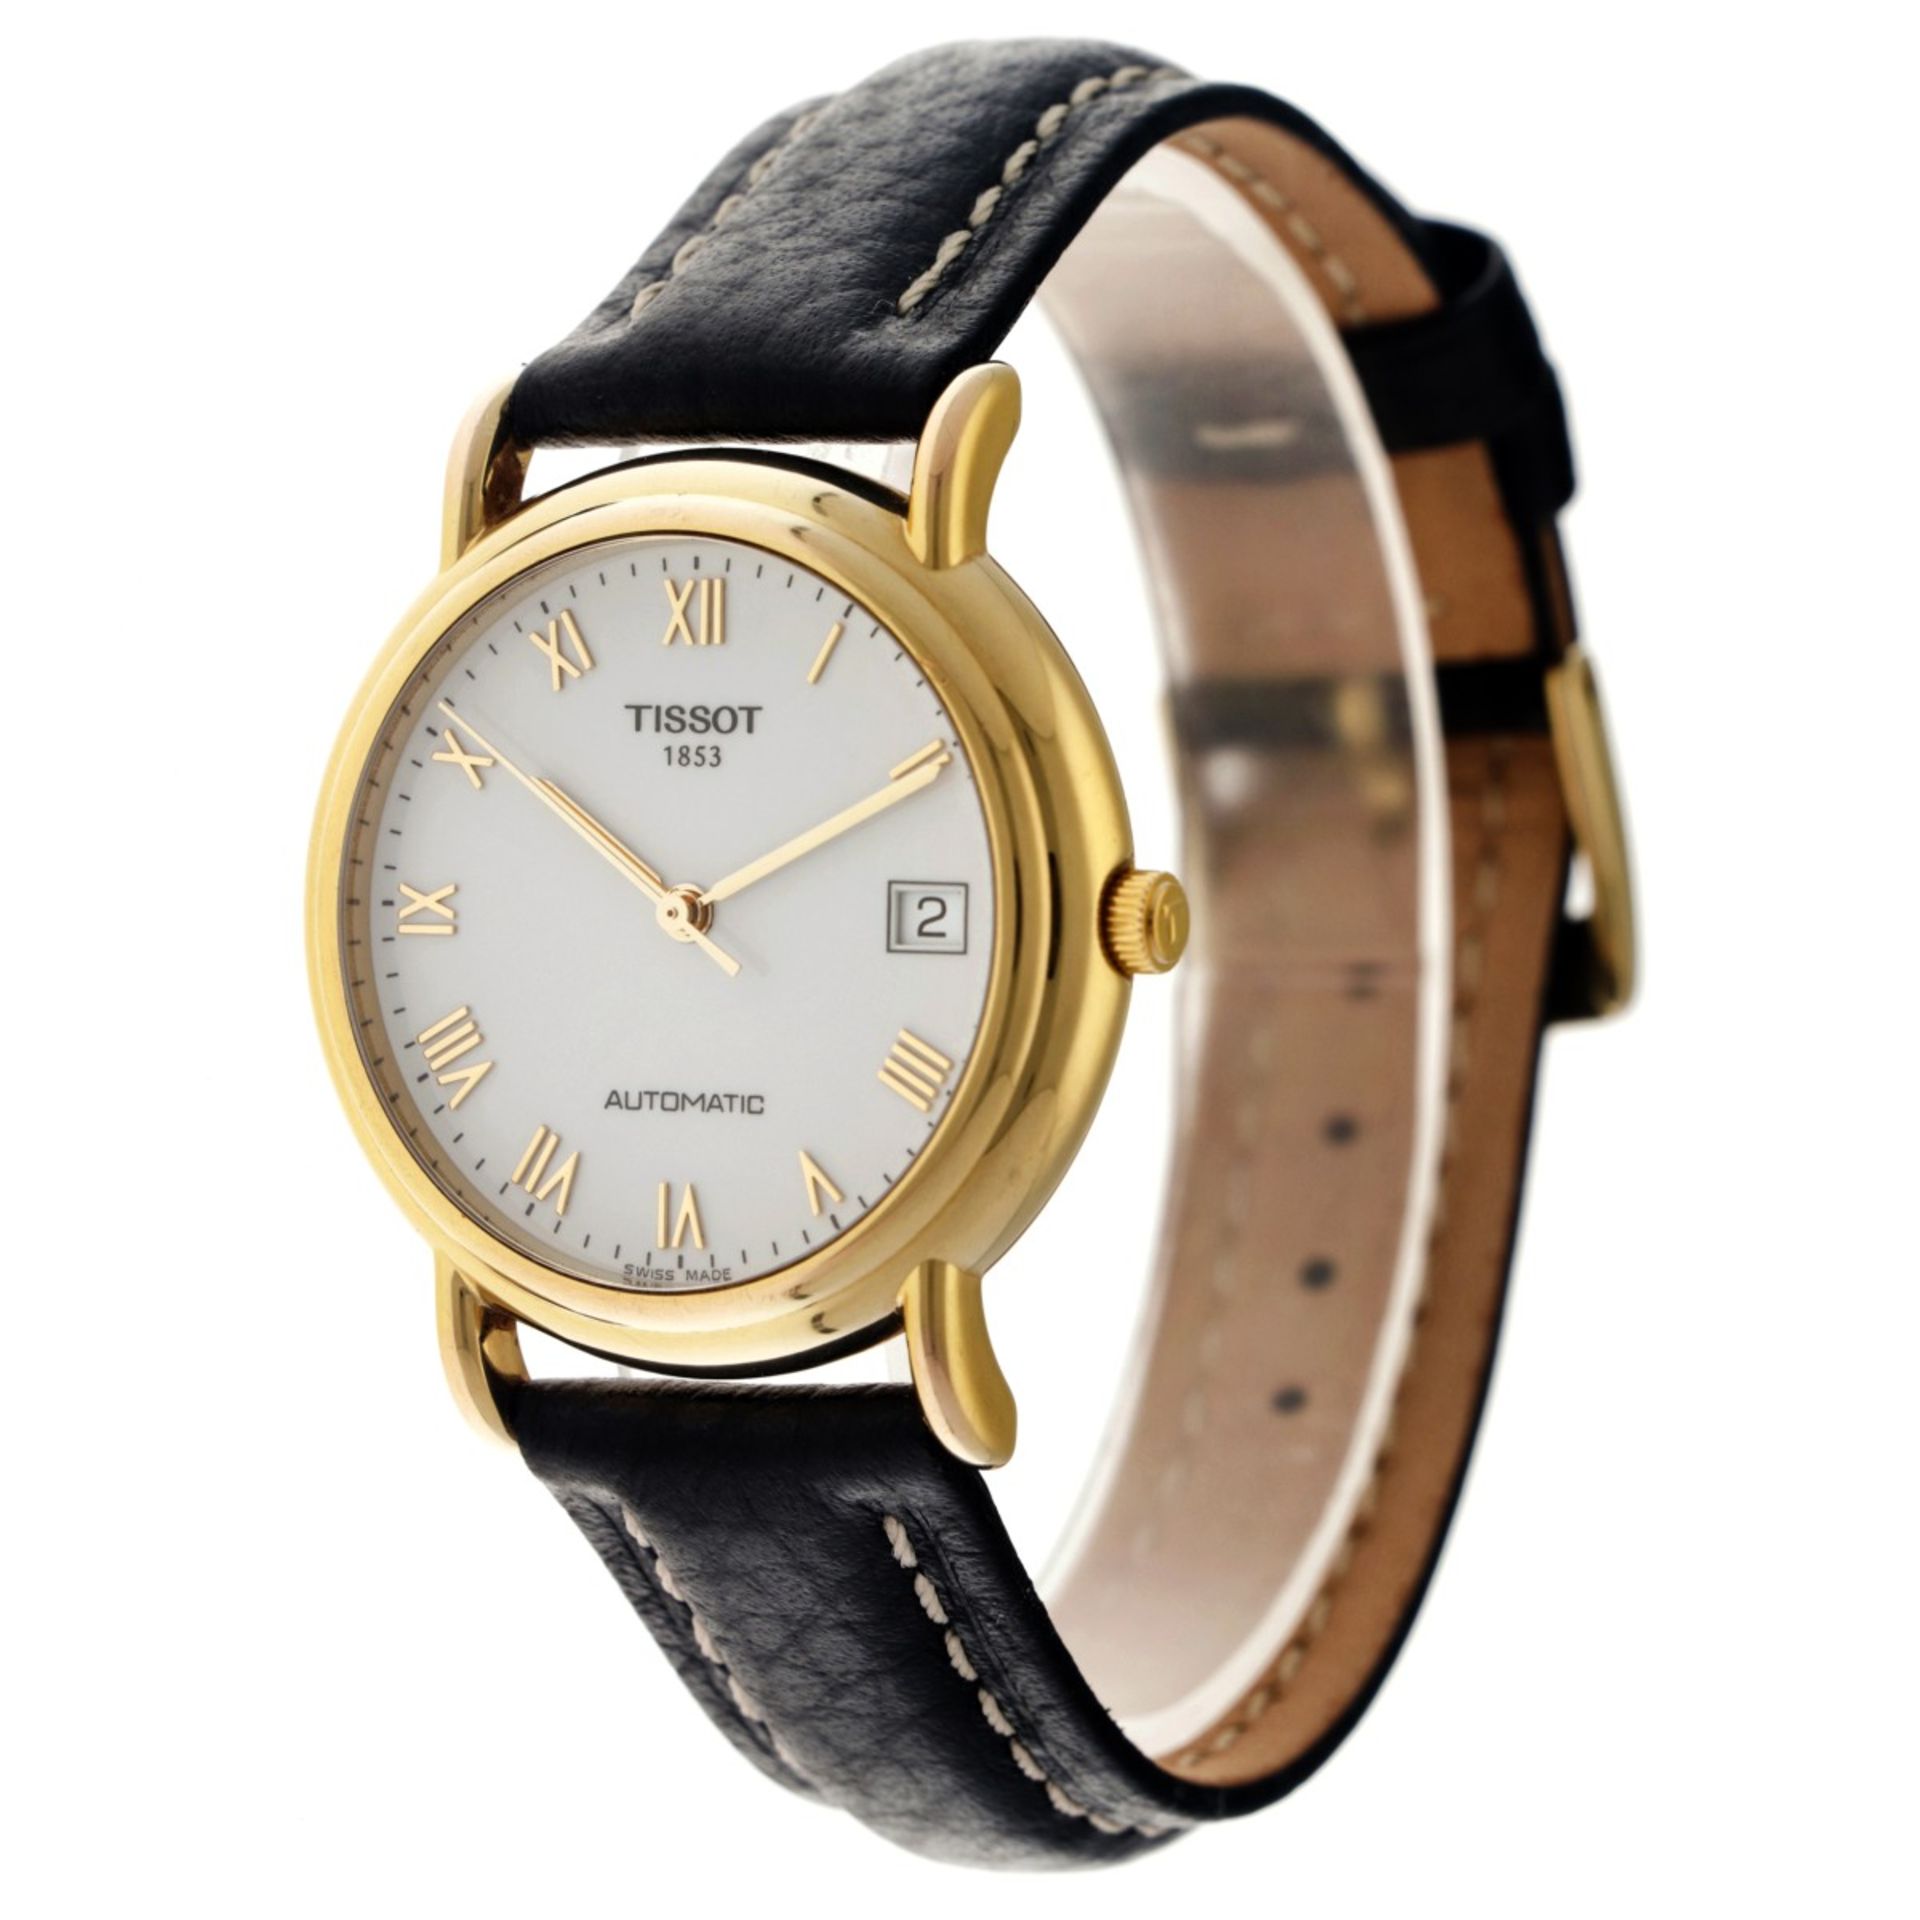 Tissot T-Gold T71.3.444.13 - Men's watch - 2011. - Image 2 of 6